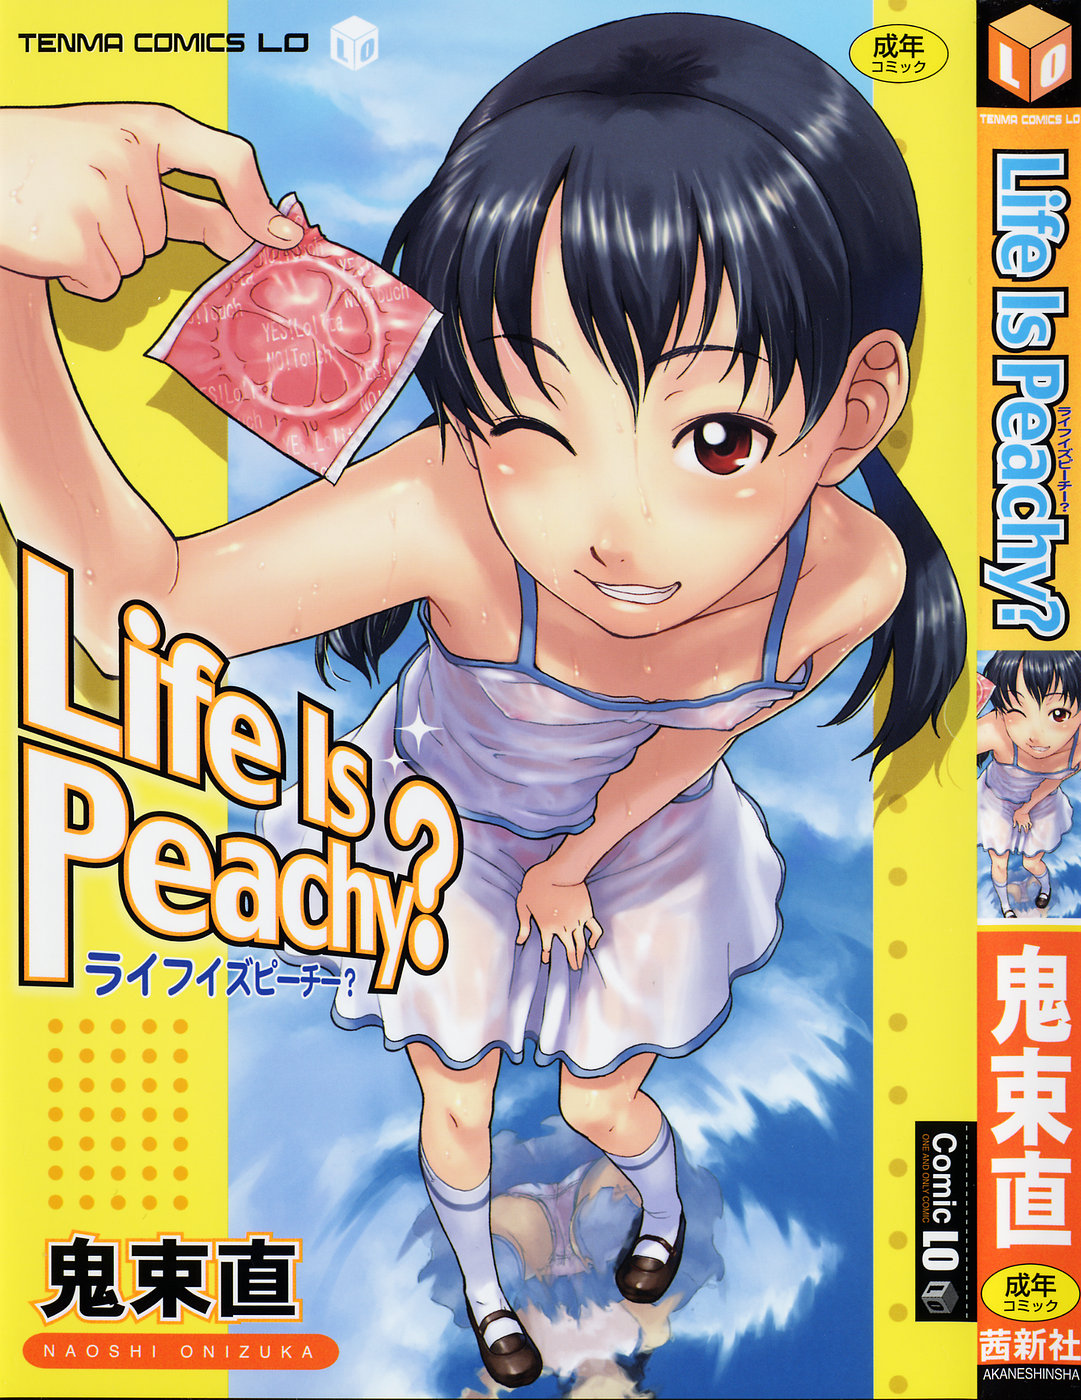 [Onizuka Naoshi] Life Is Peachy? page 1 full